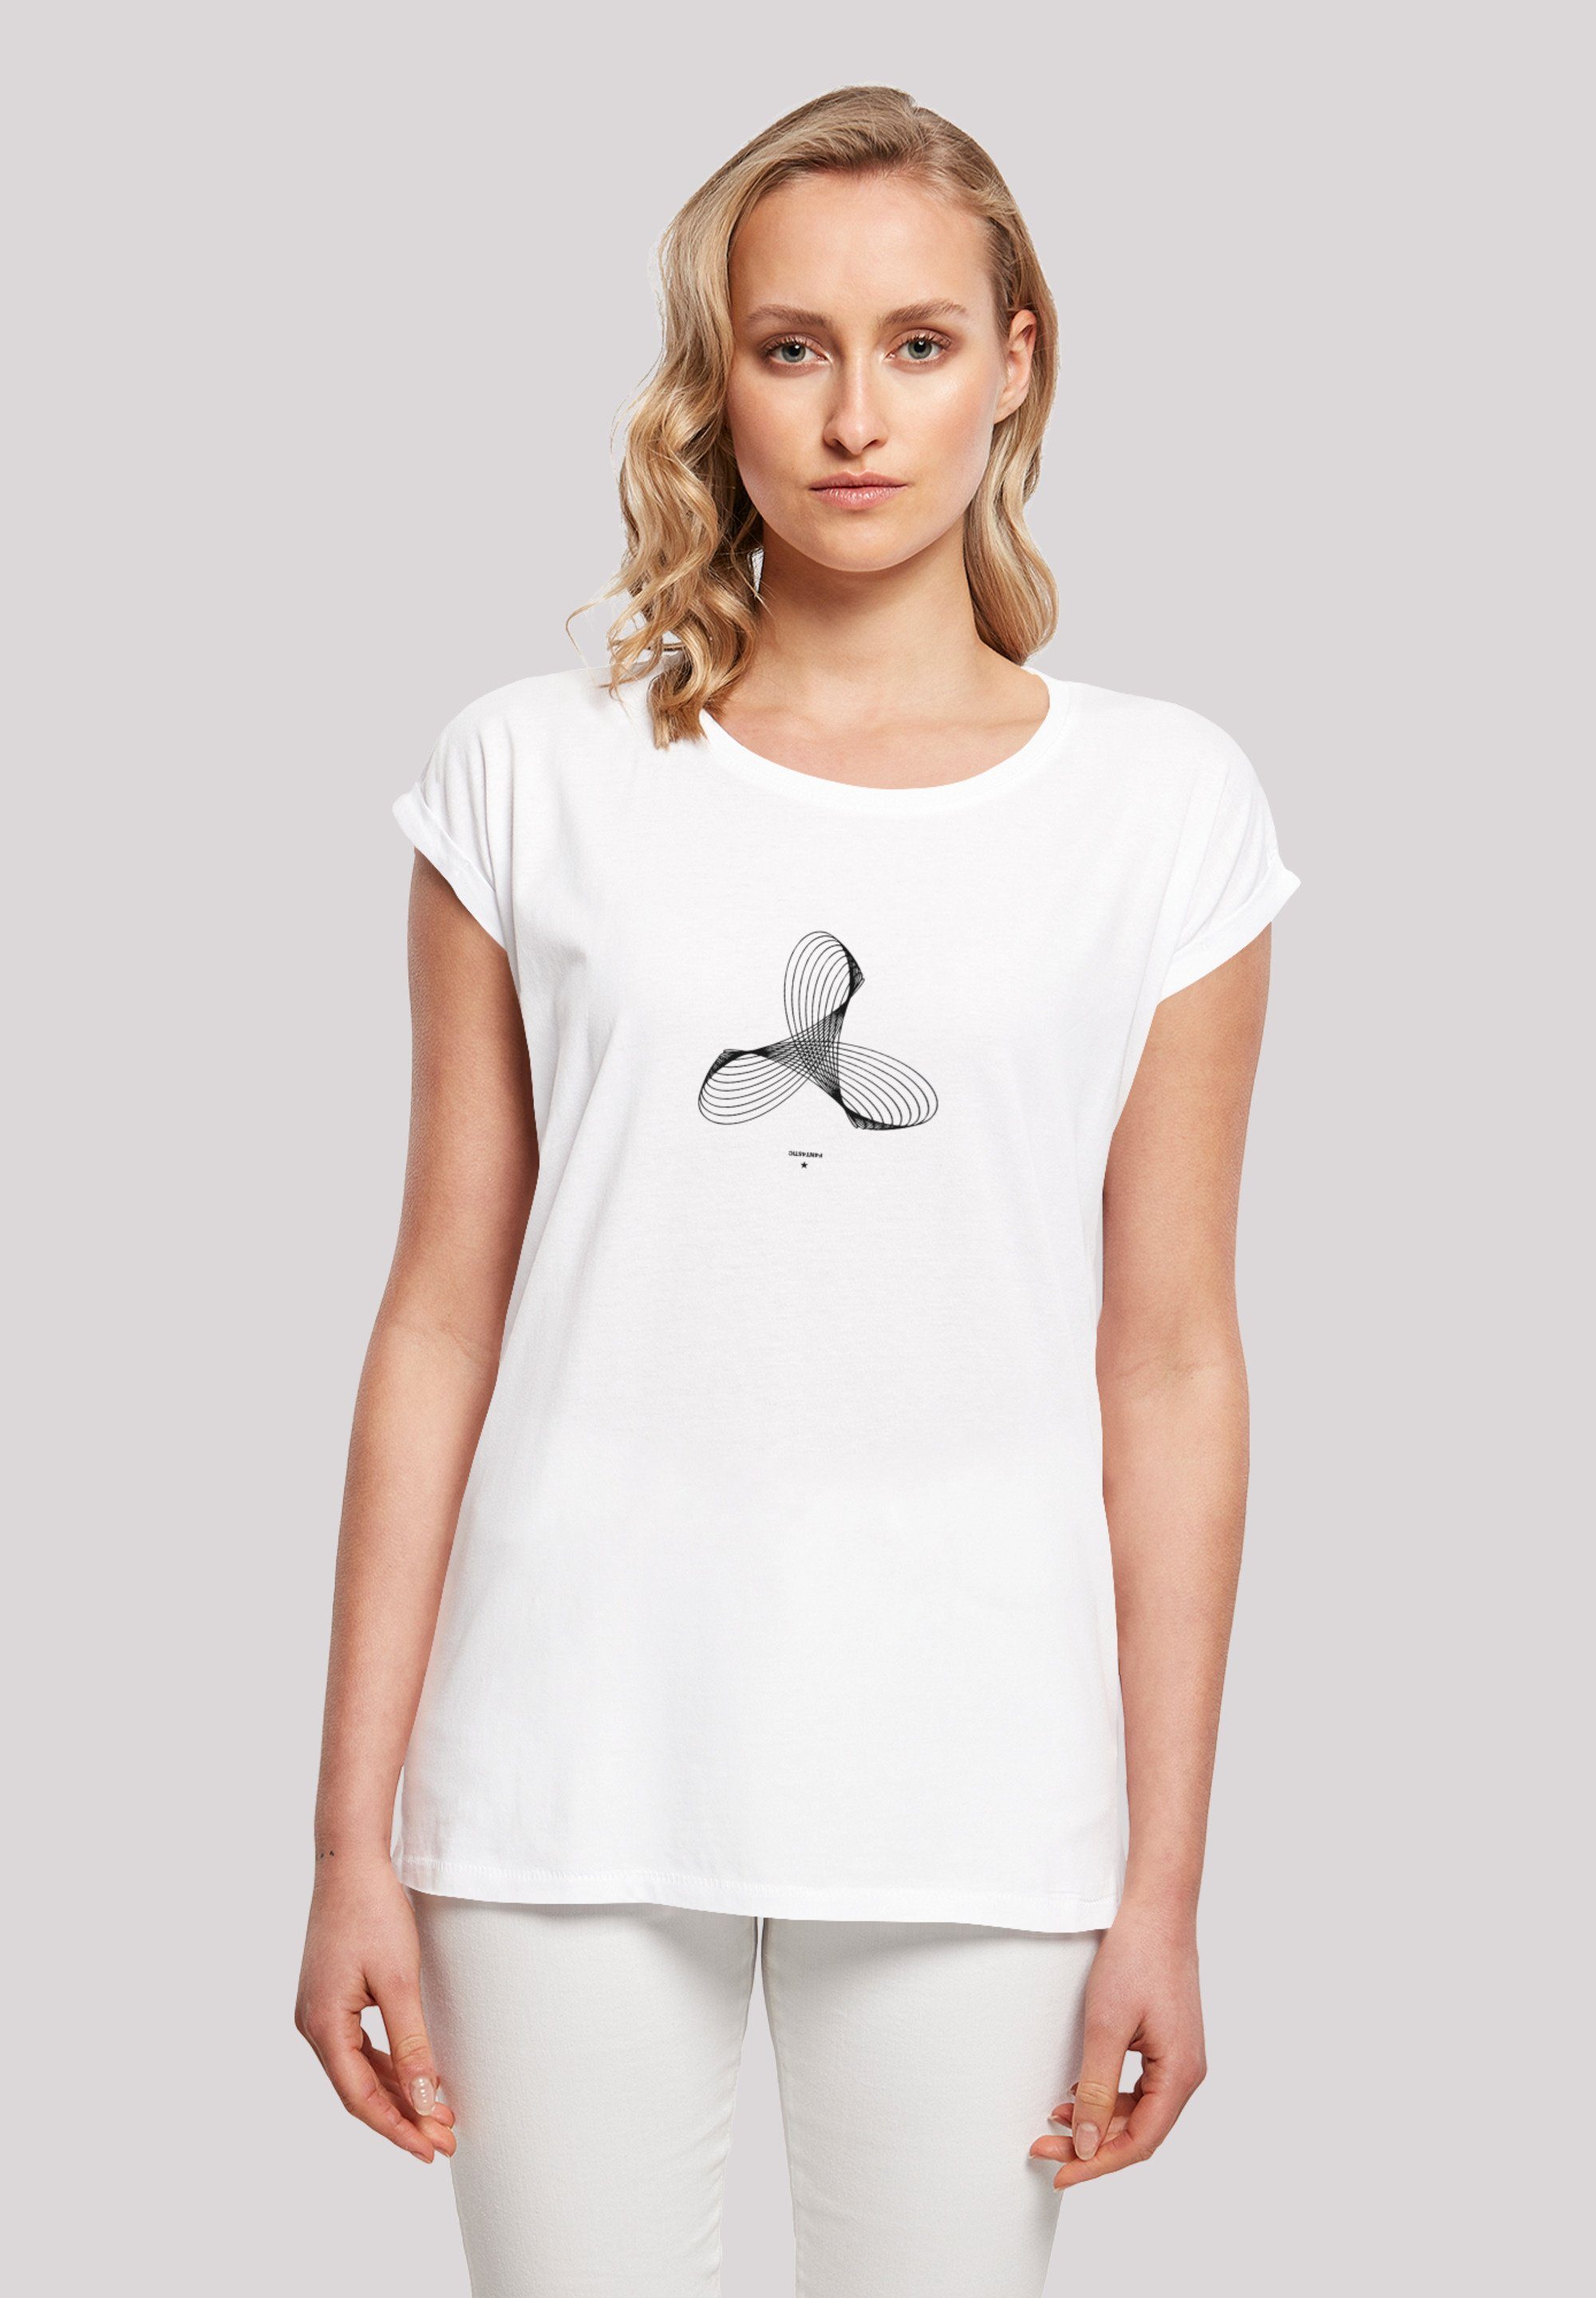 F4NT4STIC T-Shirt 170 groß Geometrics Model Das cm Größe M Print, ist und trägt